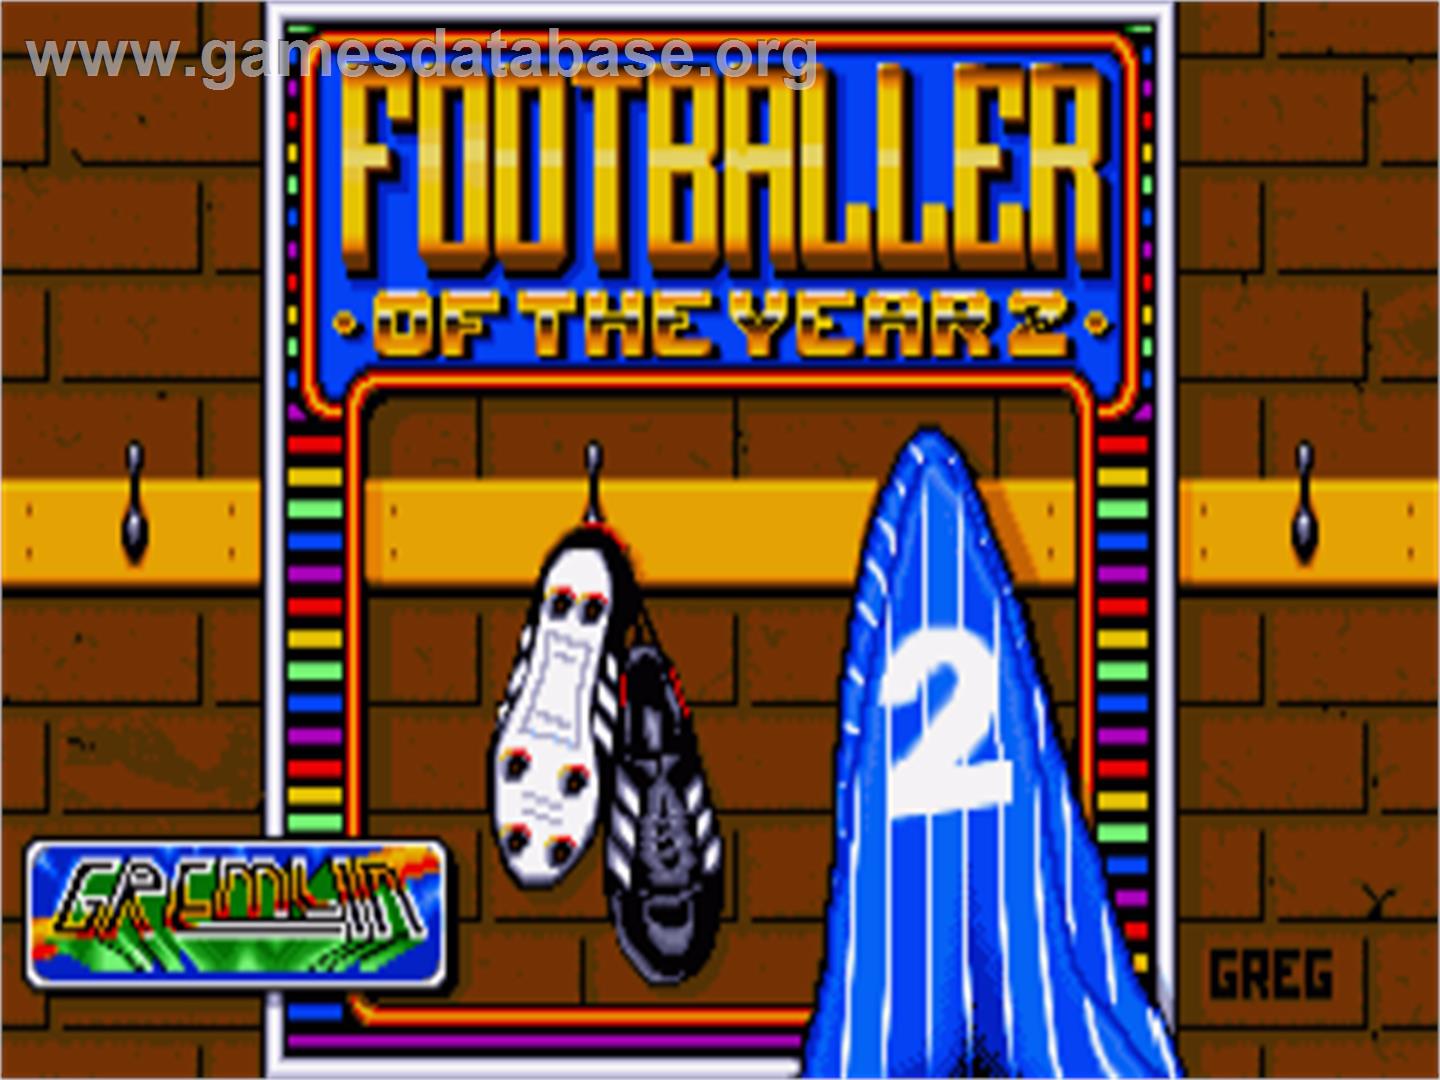 Footballer of the Year 2 - Commodore Amiga - Artwork - Title Screen